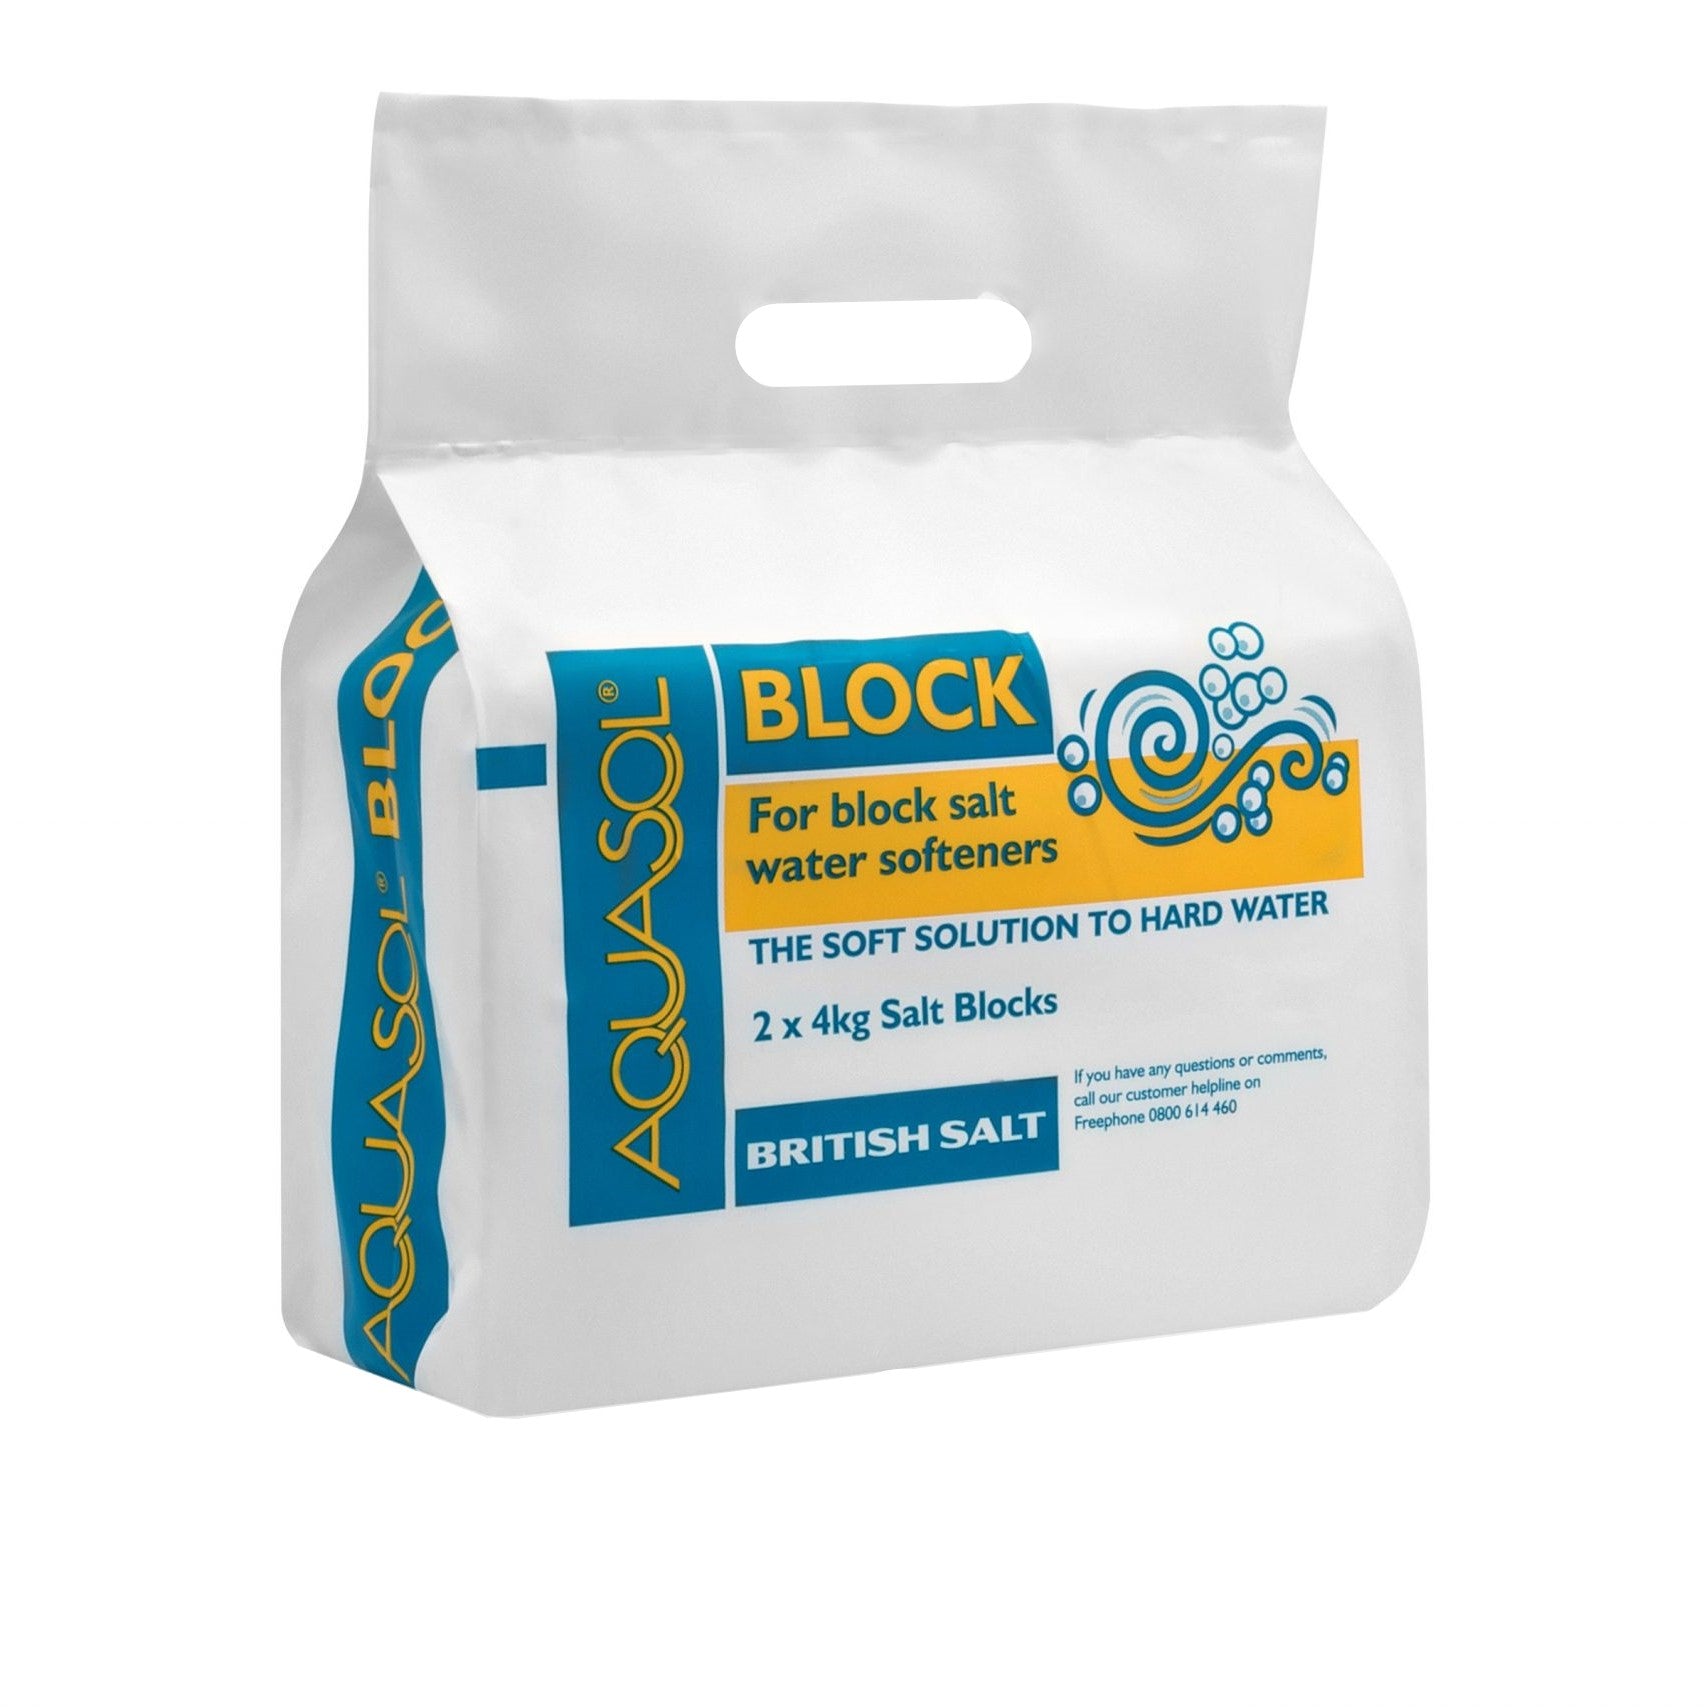 Kinetico Block Salt Twin Pack*